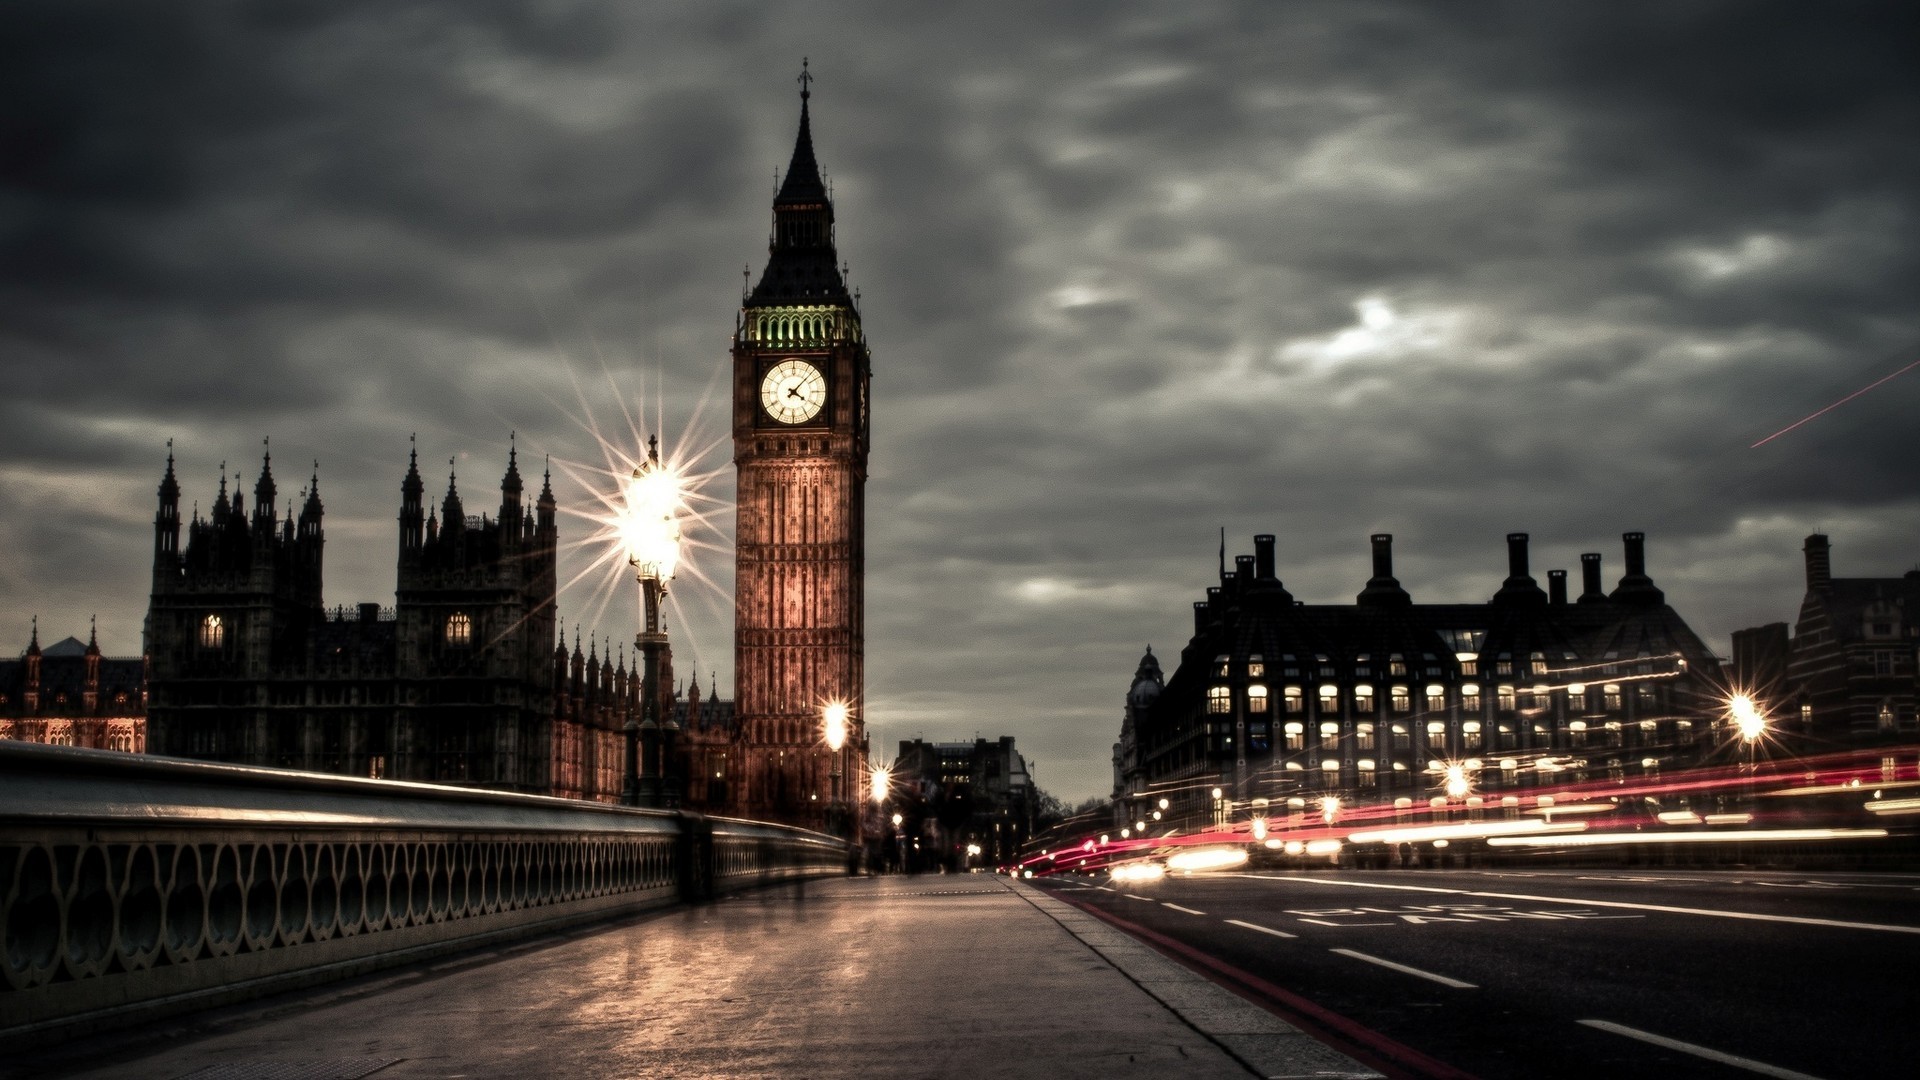 General 1920x1080 cityscape city building HDR Big Ben lights London long exposure UK landmark Europe clock tower